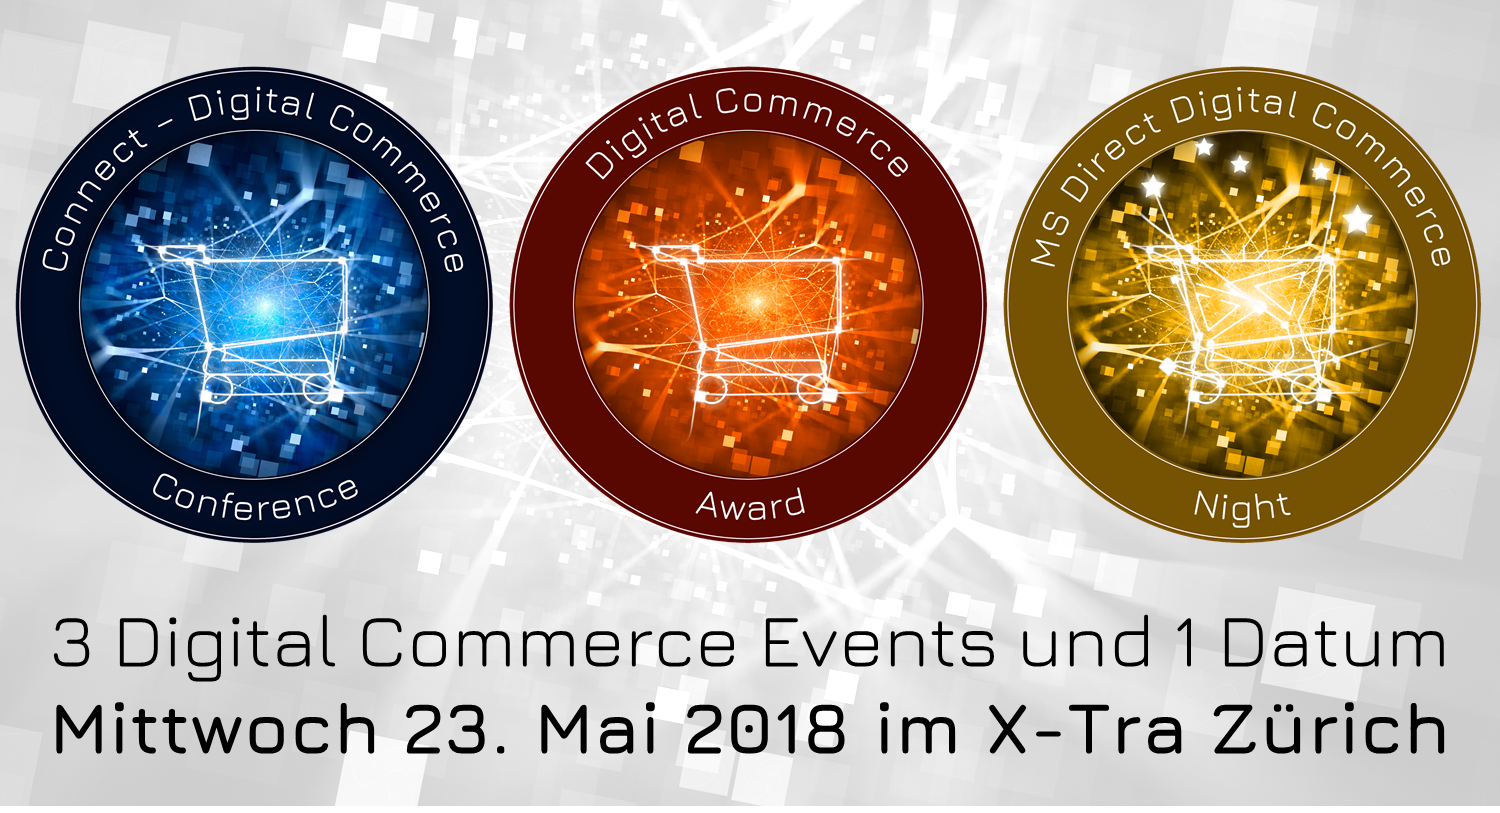 Connect - Digital Commerce Conference / Digital Commerce Award / Digital Commece Night